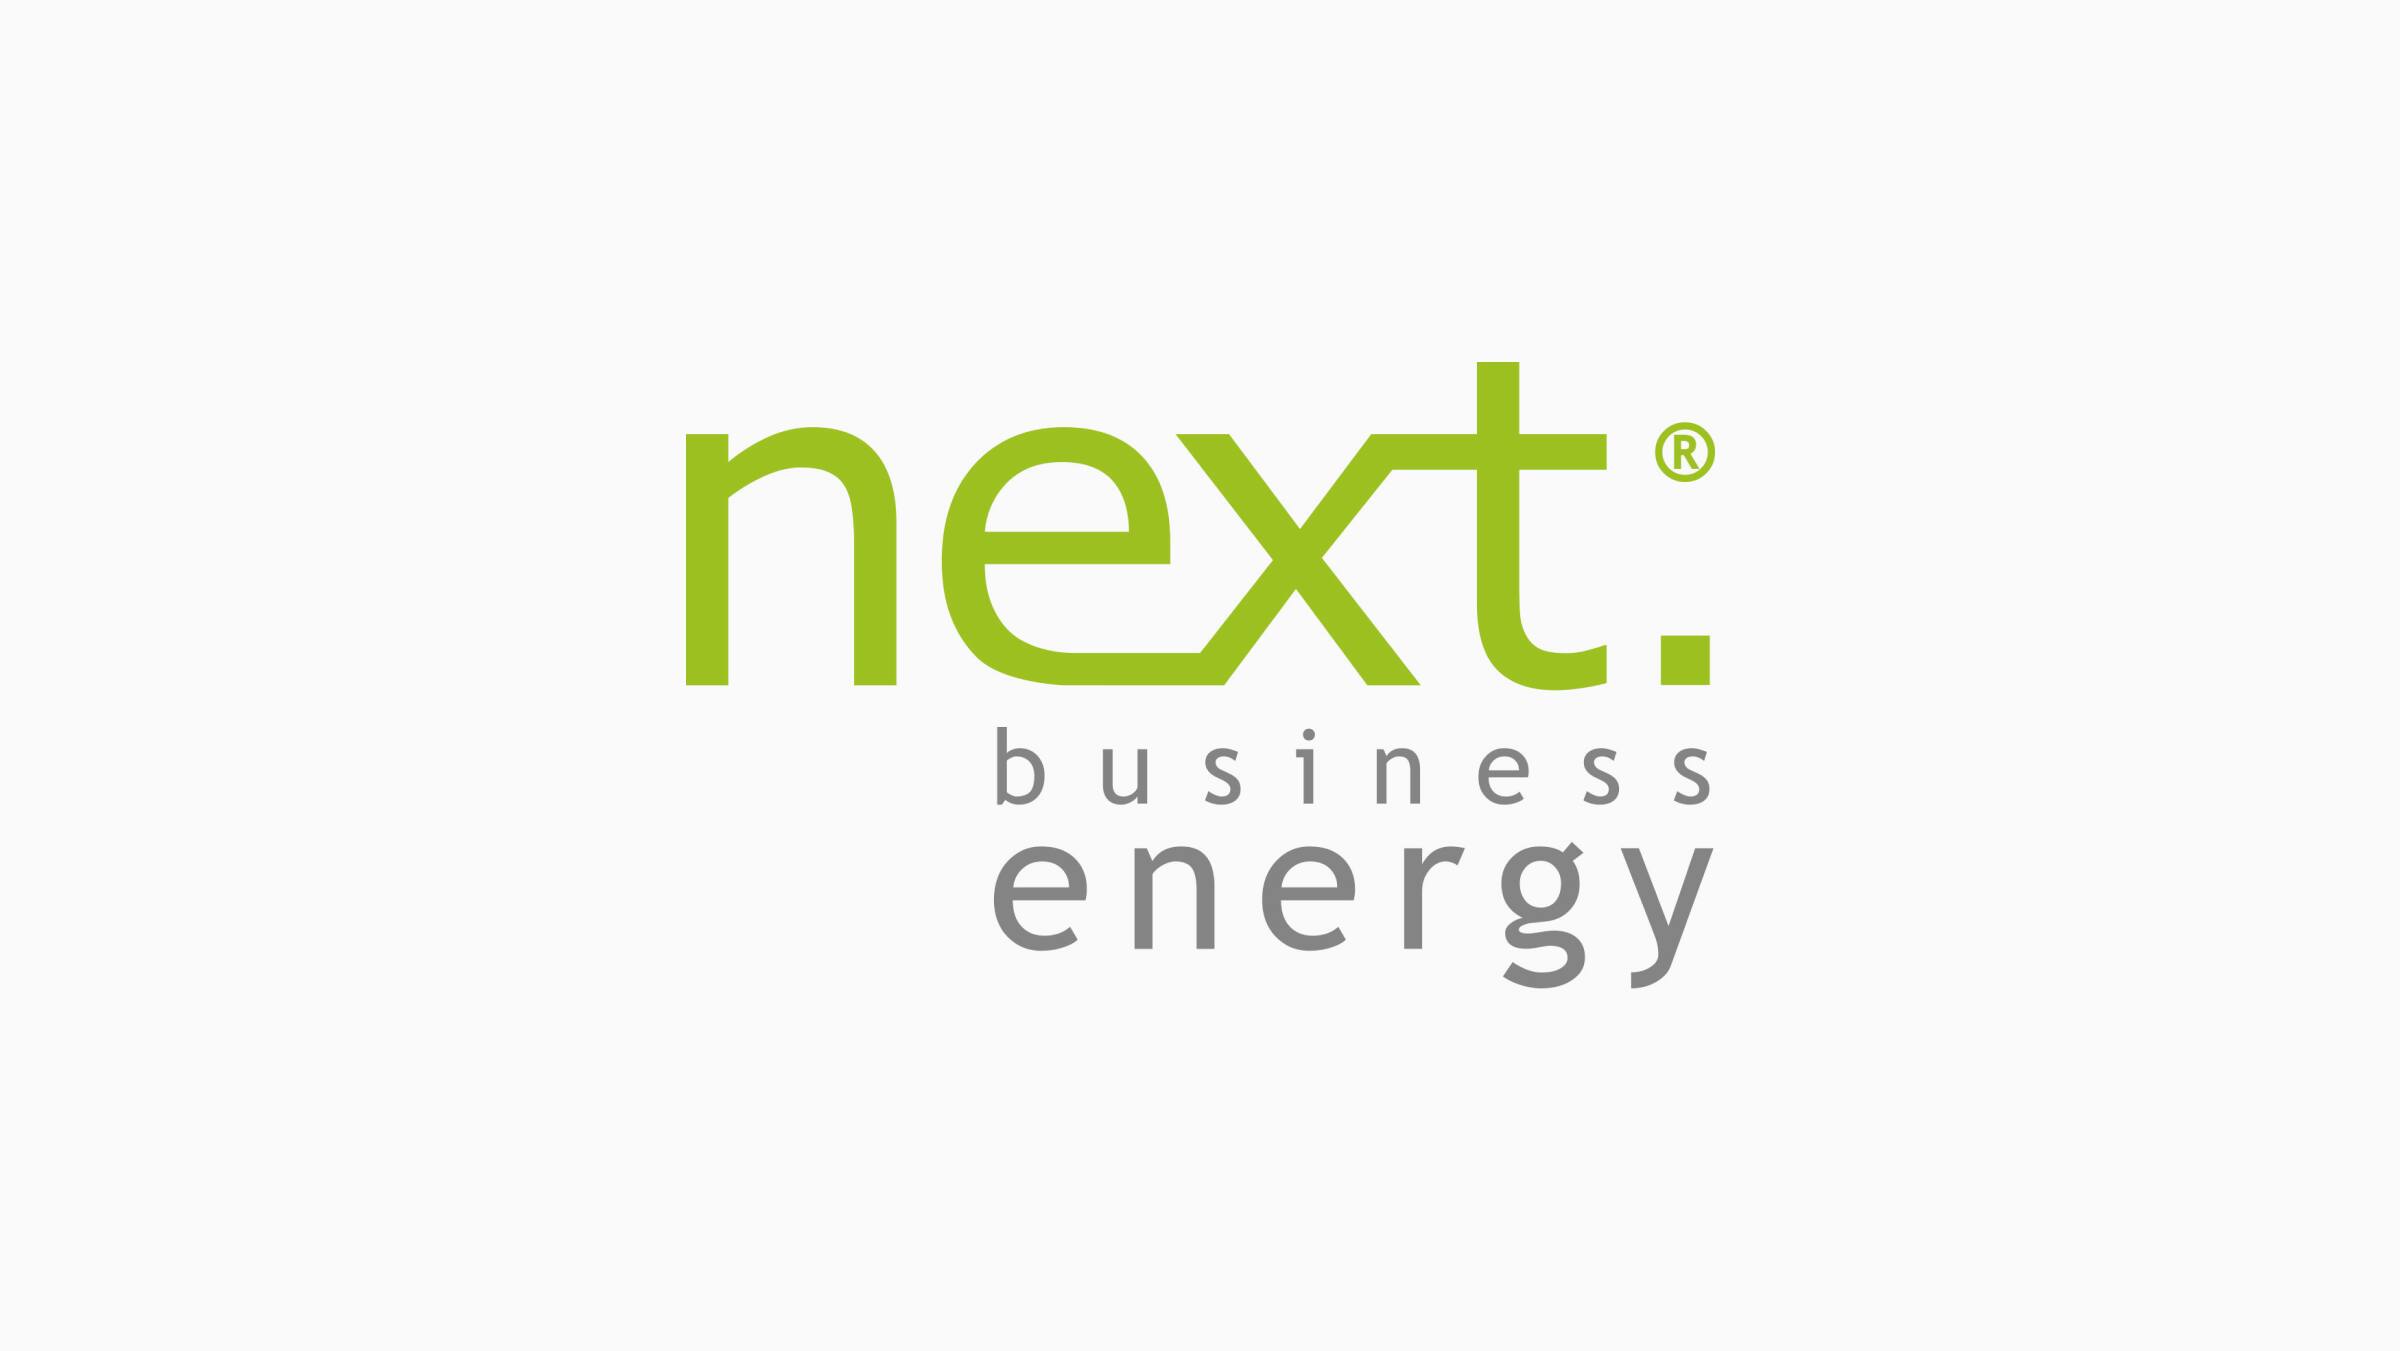 The Next Business Energy logo